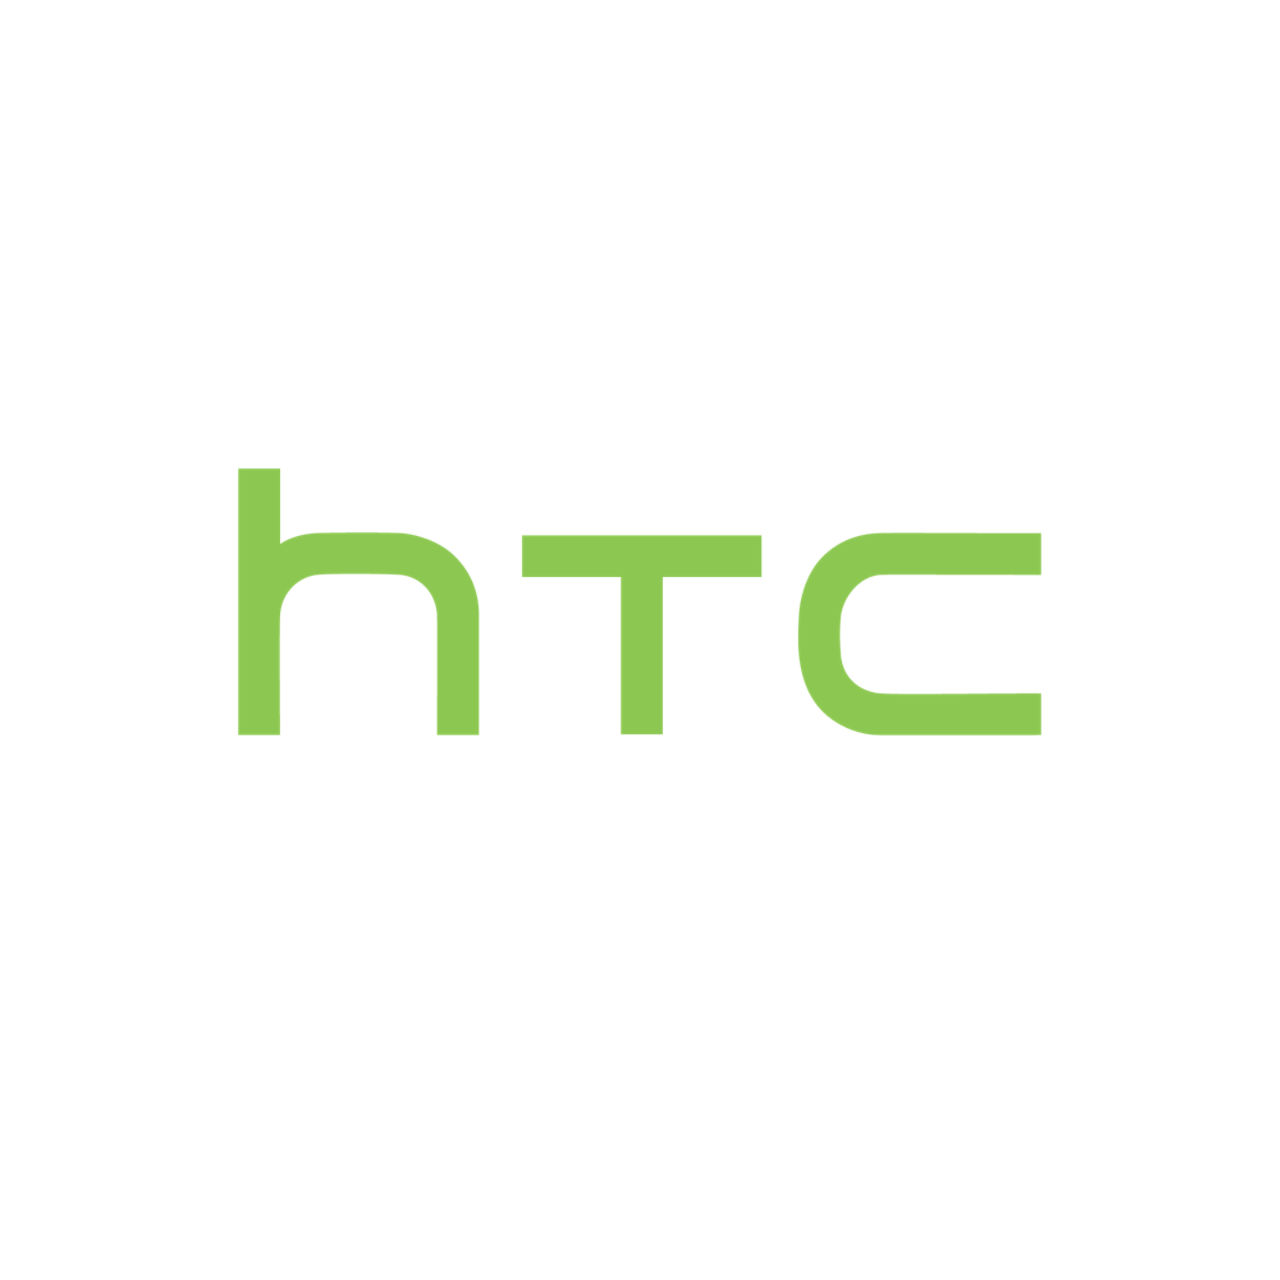 htc Logo